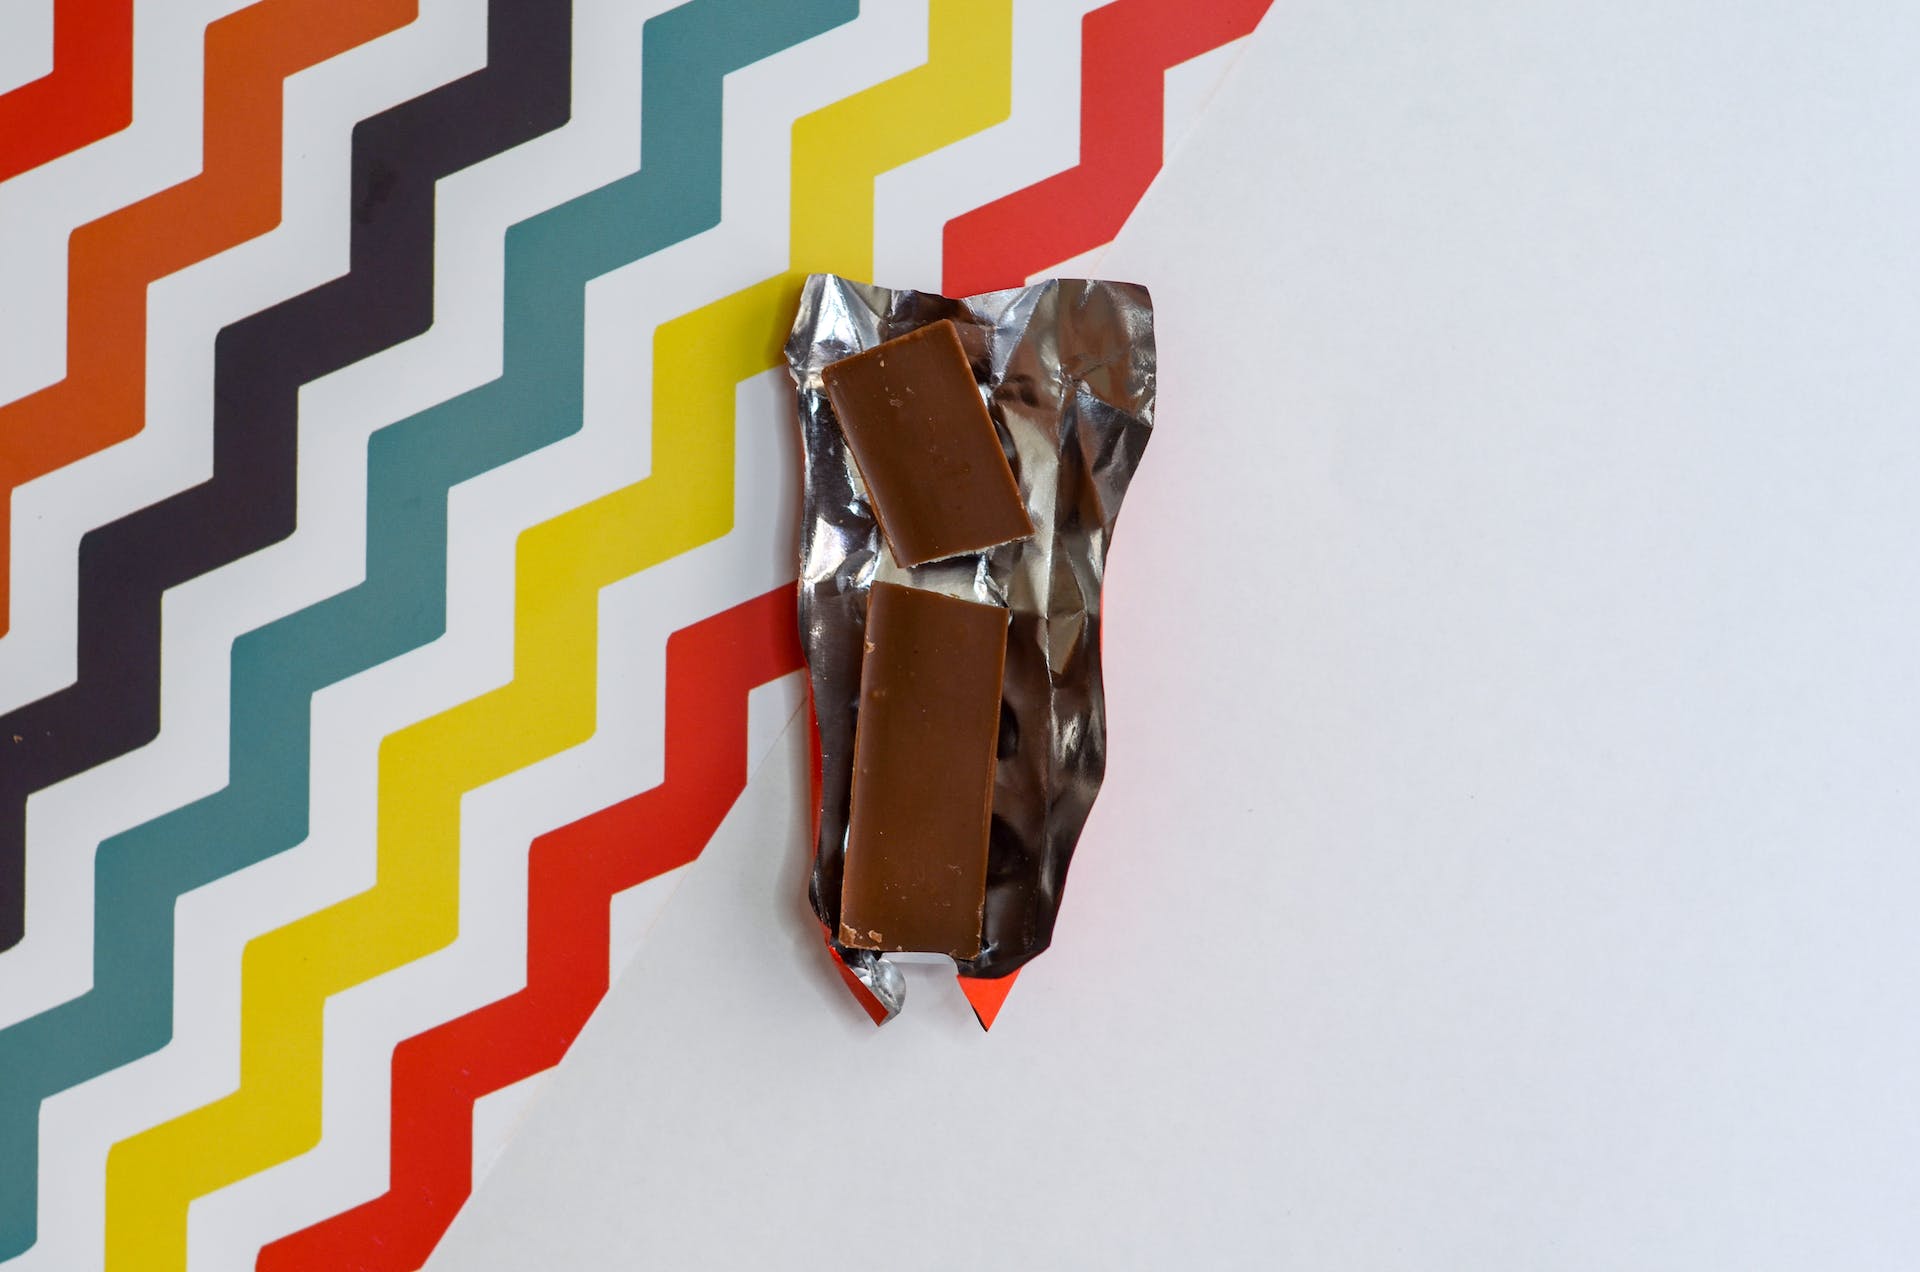 A chocolate bar | Source: Pexels